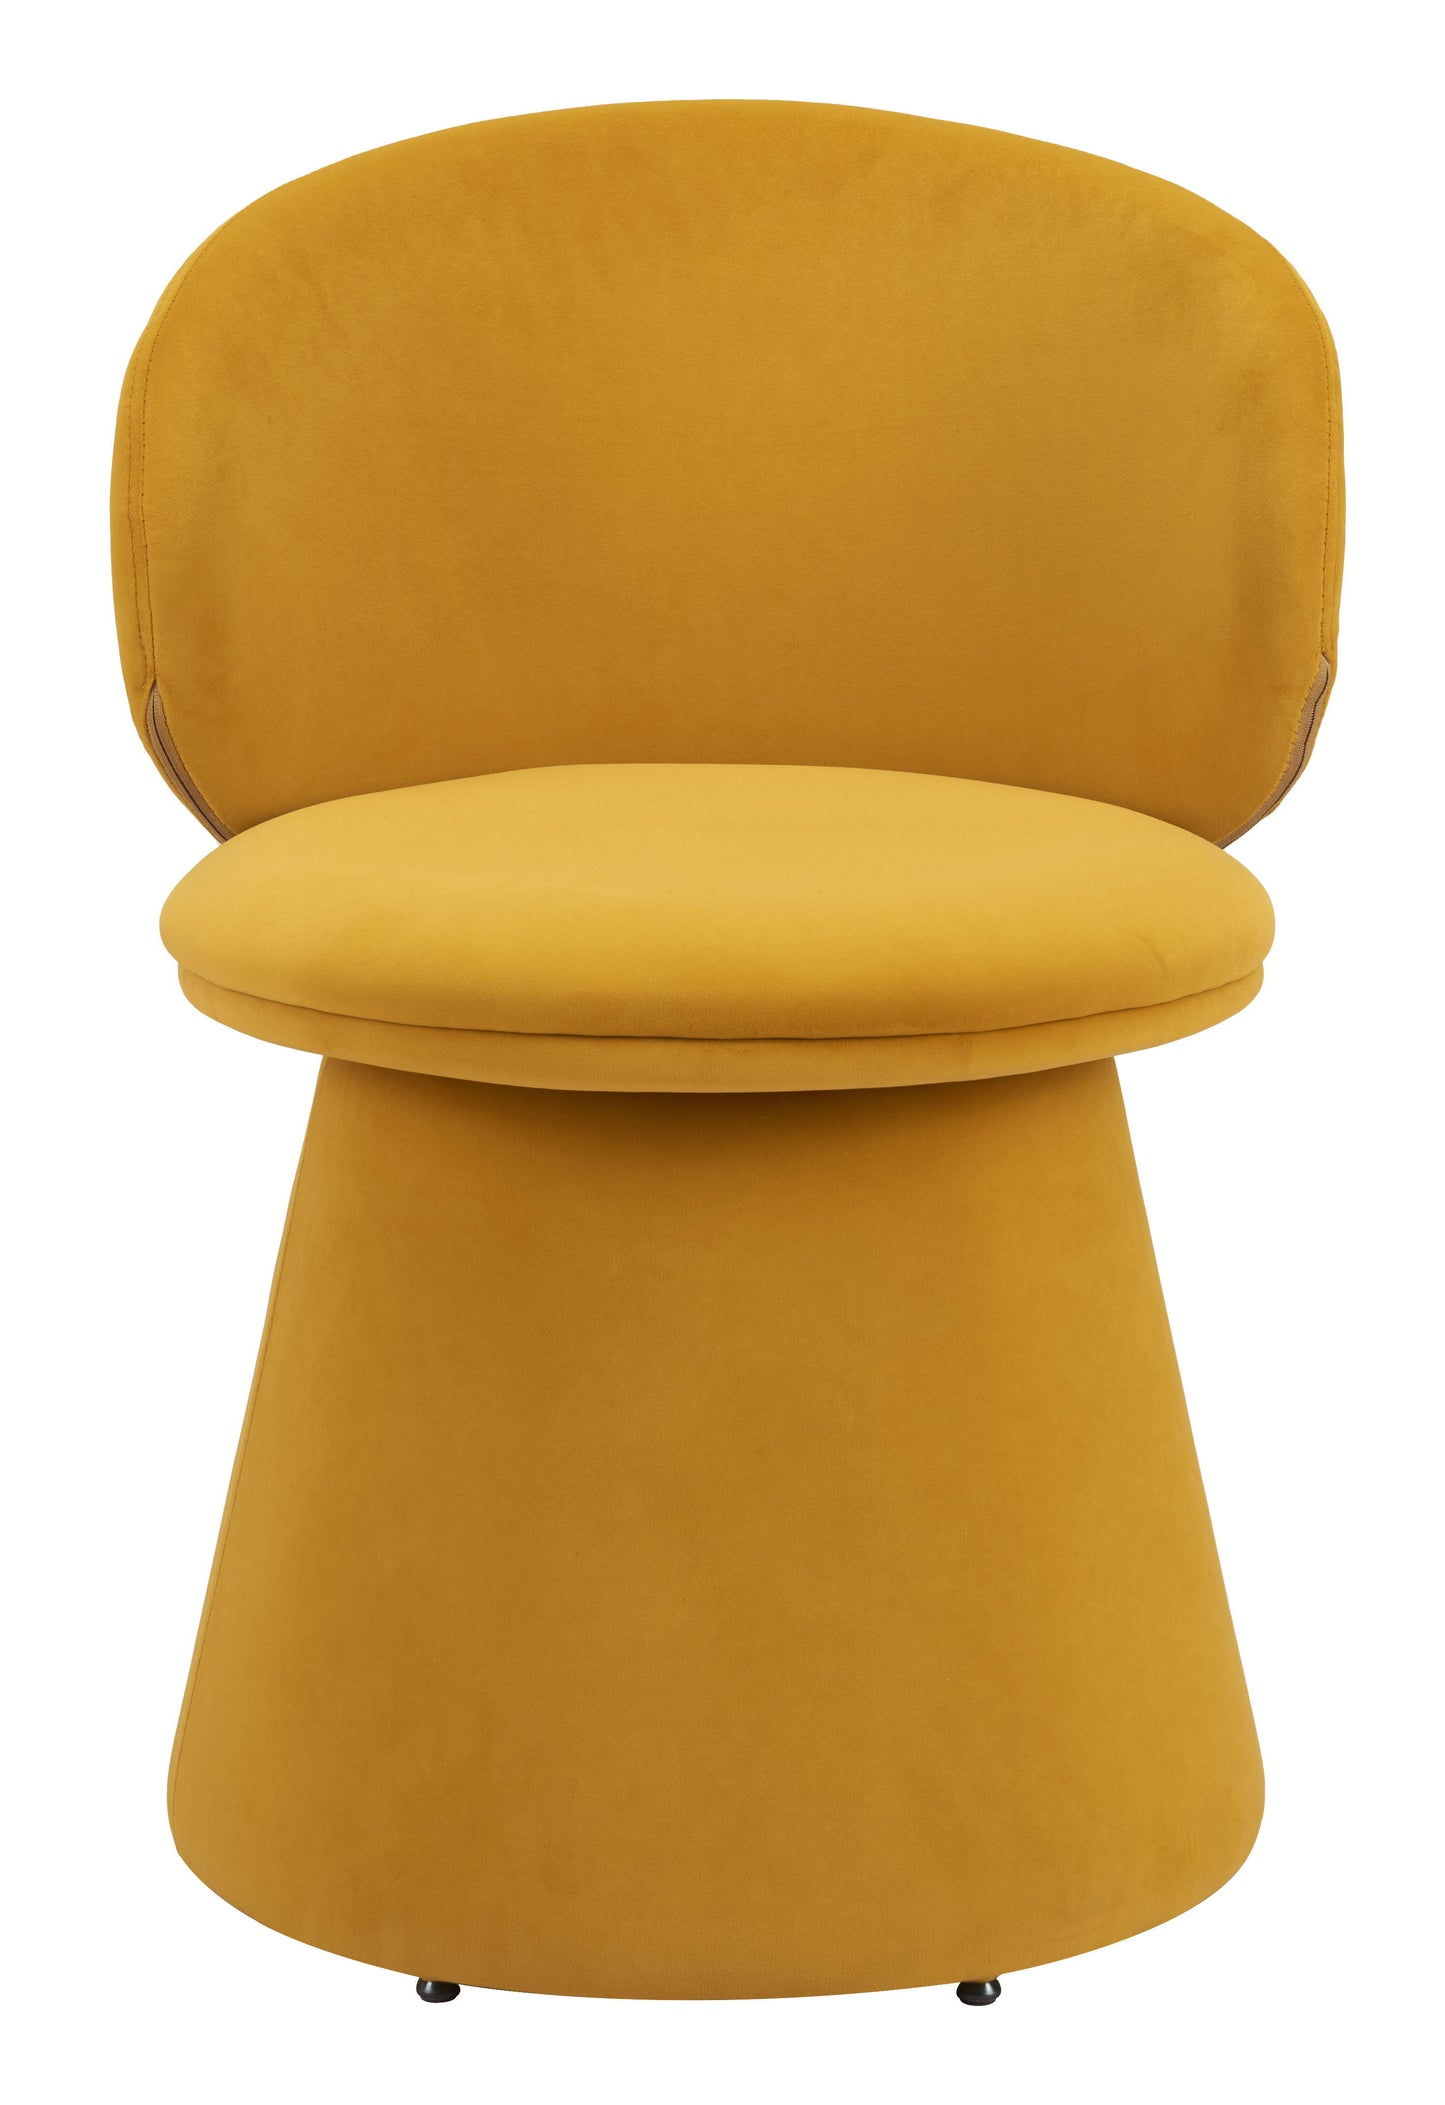 Oblic - Swivel Dining Chair - Orange